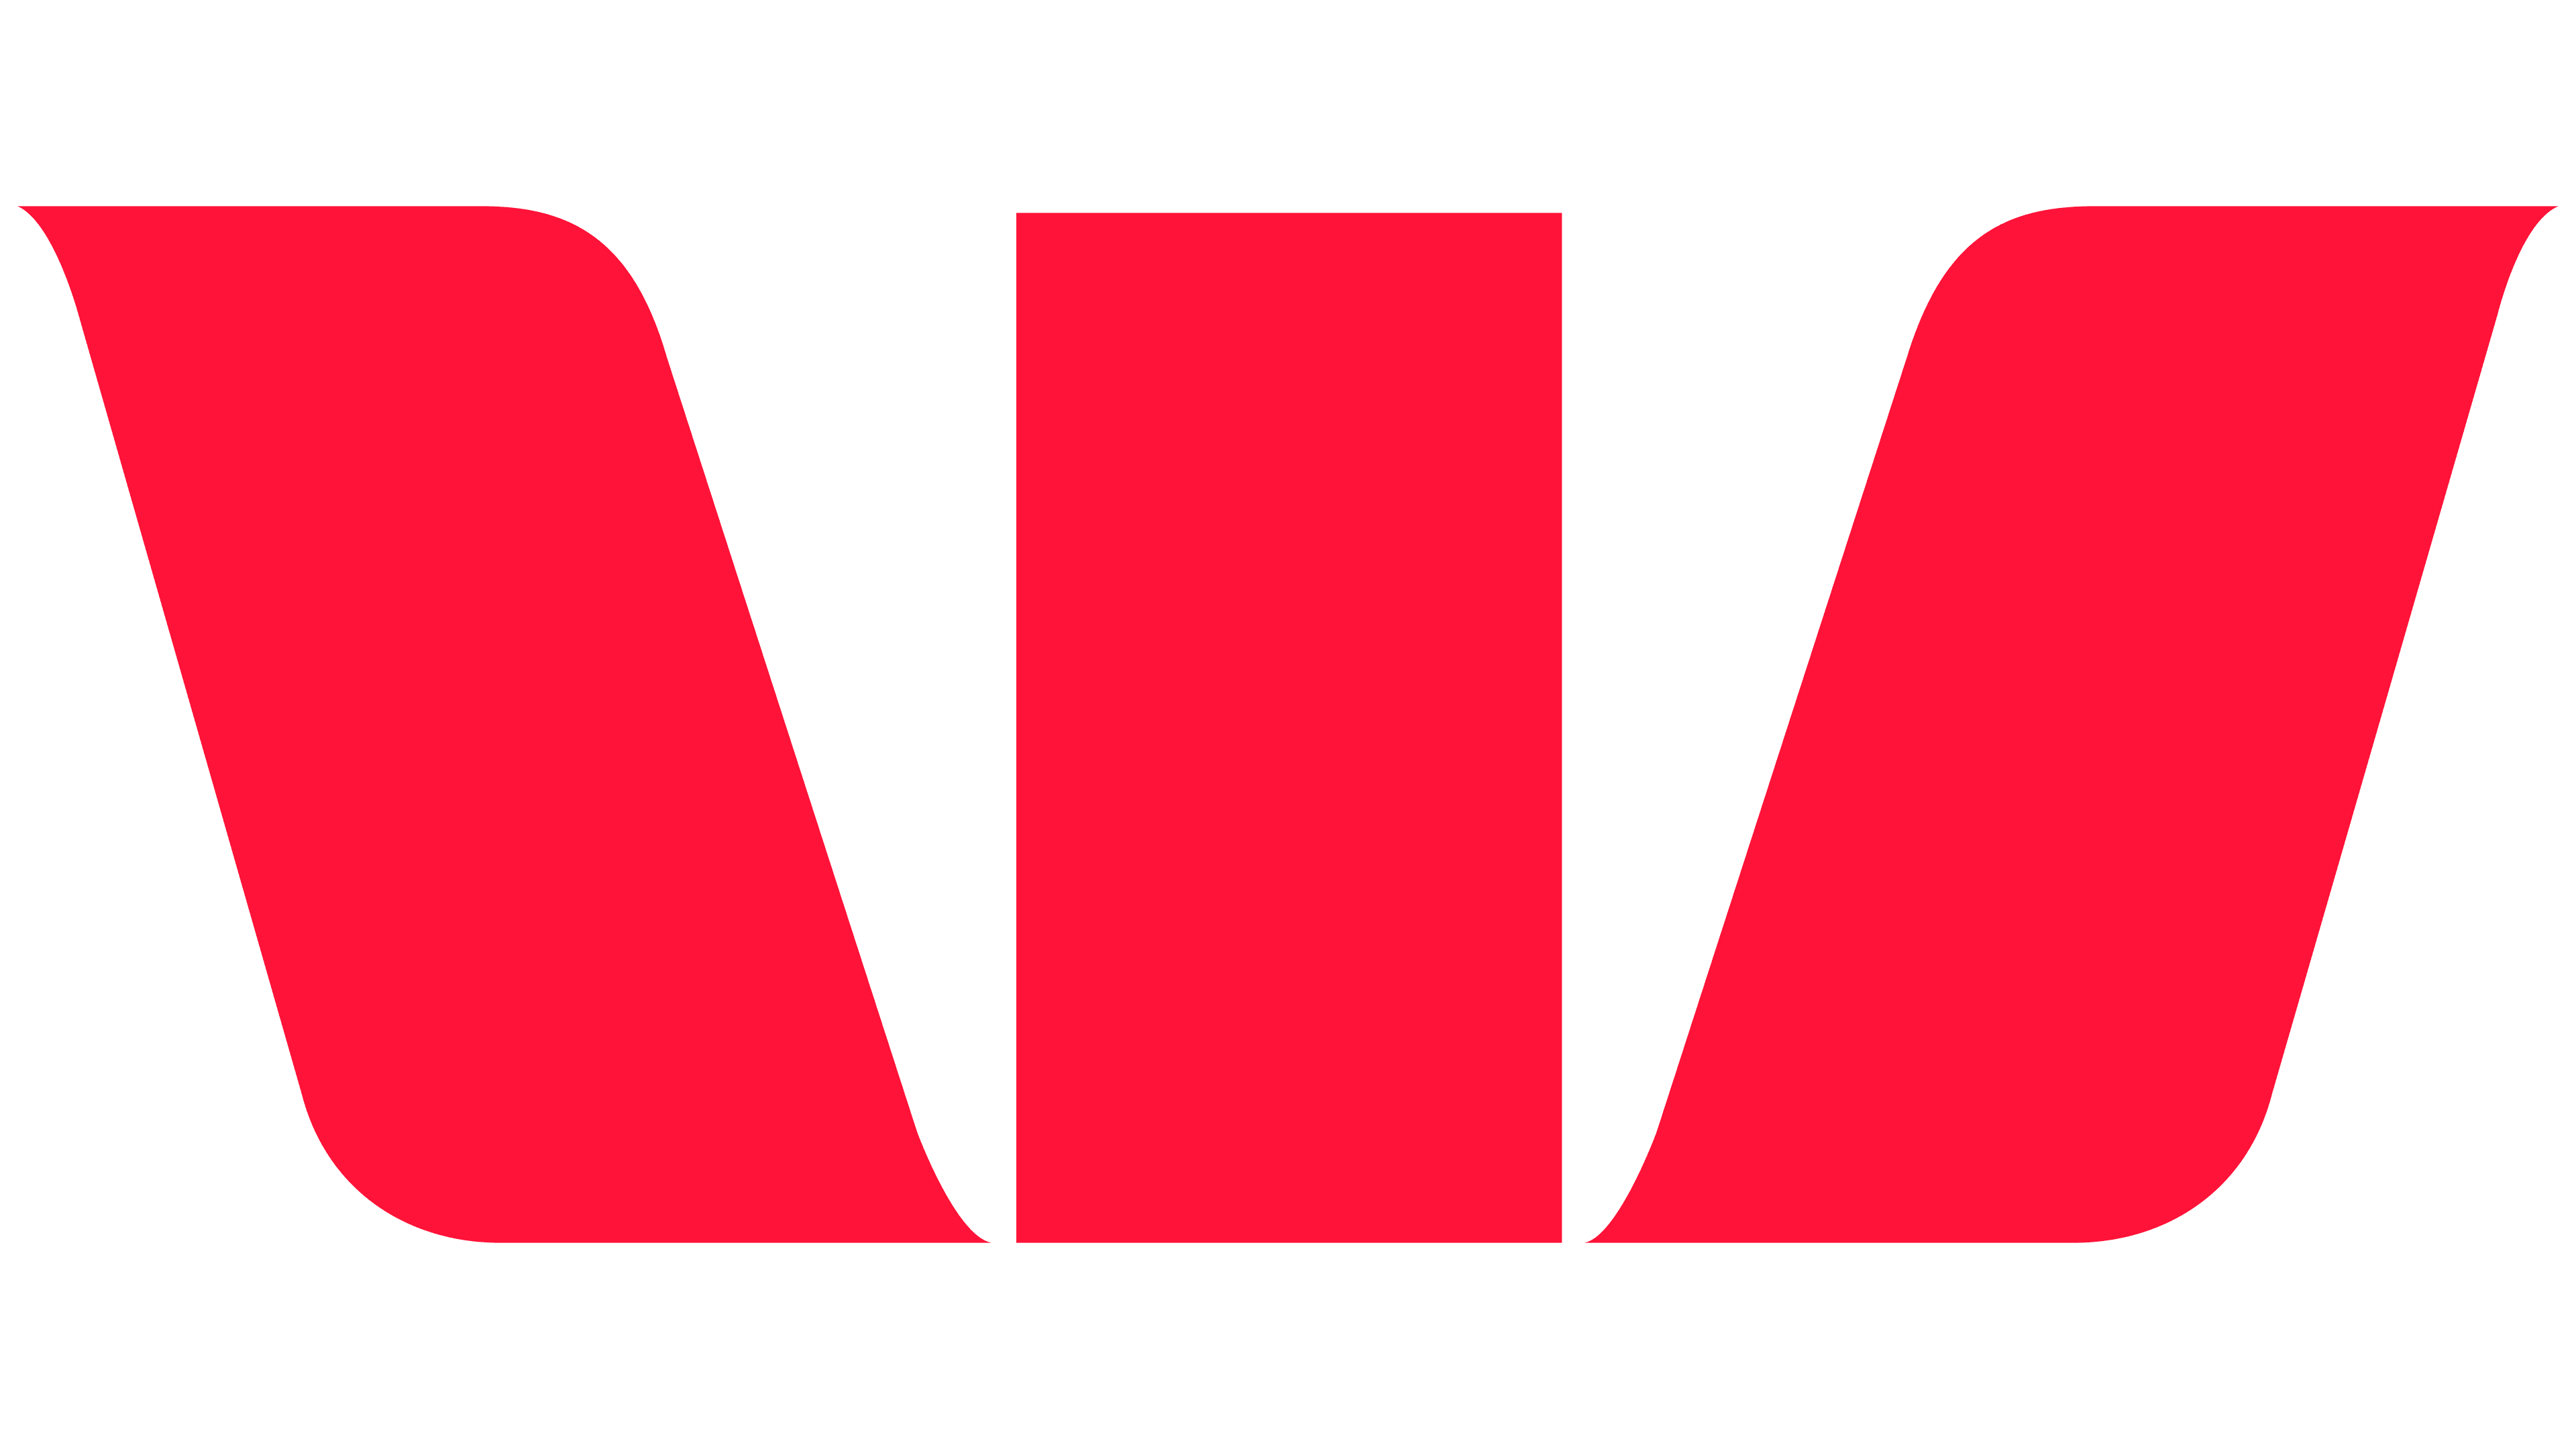 Westpac-Logo